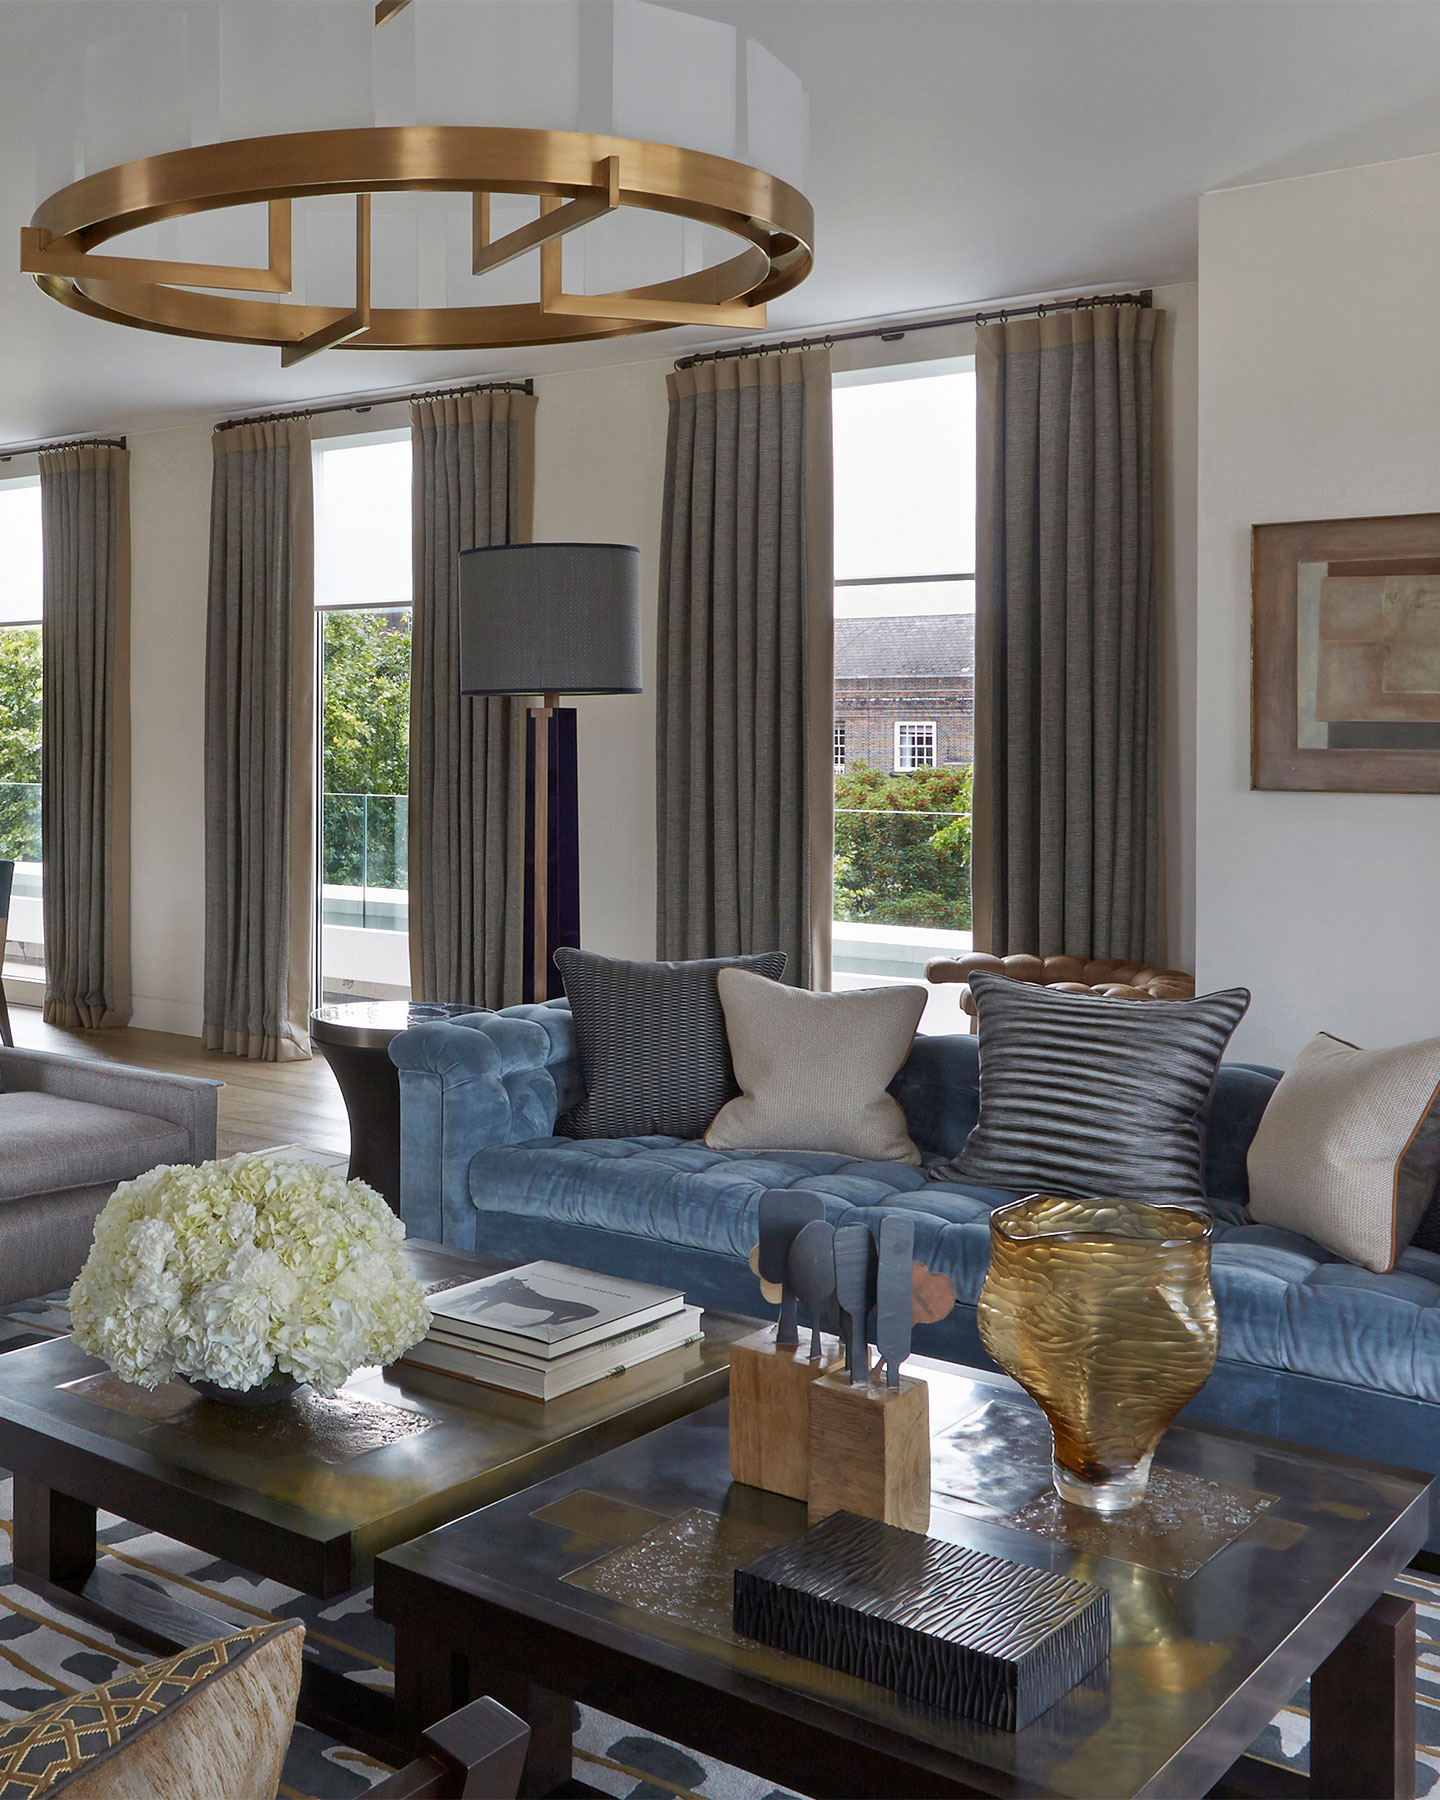 Bespoke, luxury formal living room in blue and brown tones